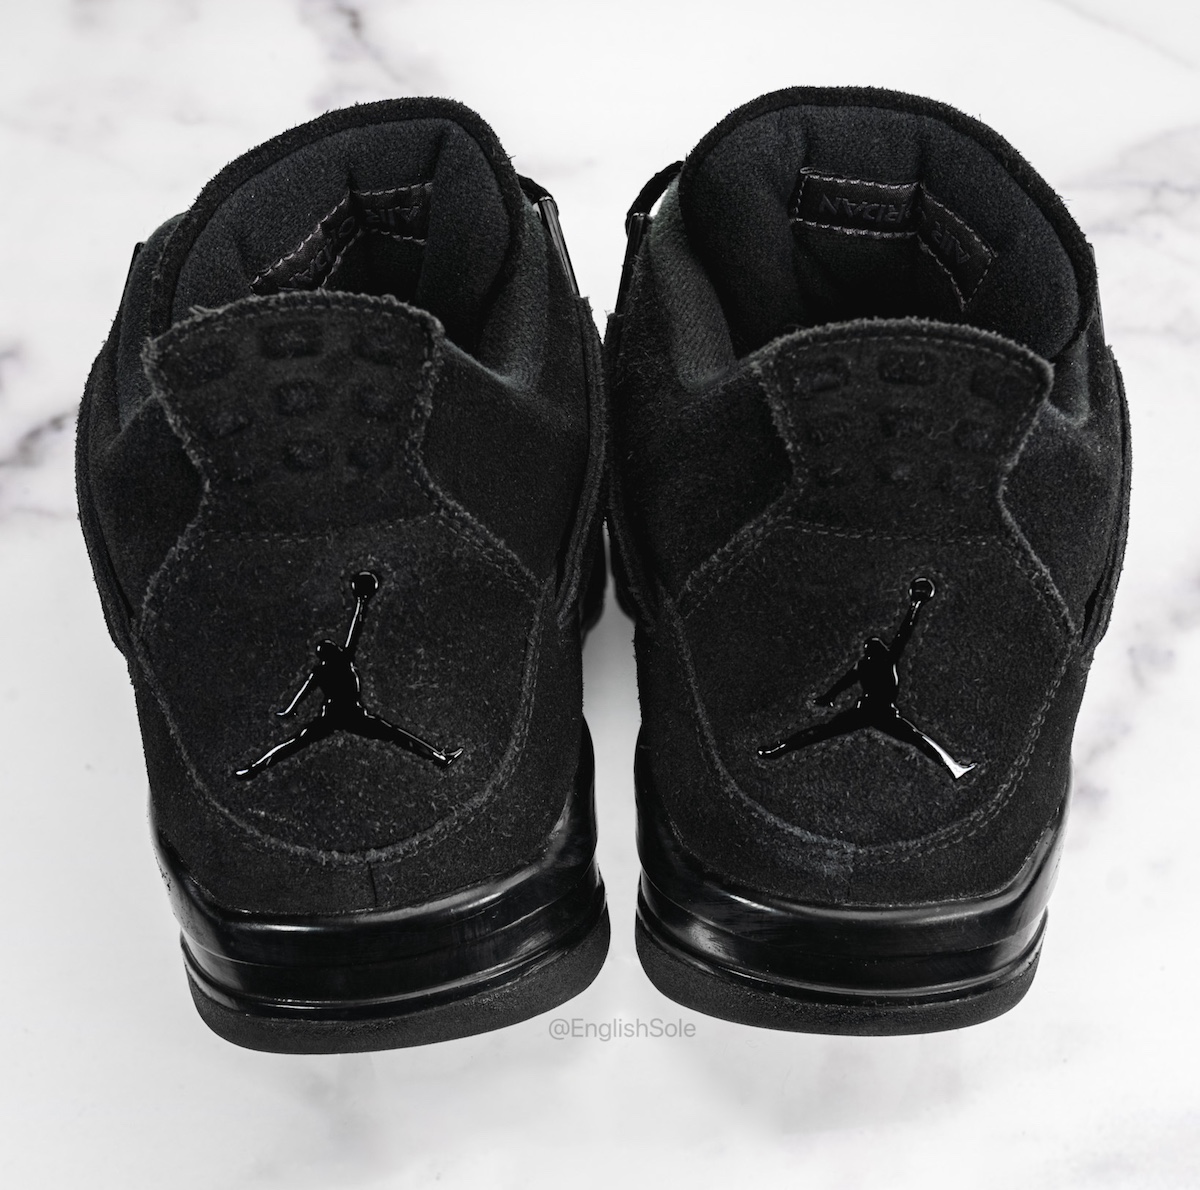 Nike SB Air Jordan 4 Black Cat Wear Test Sample 4